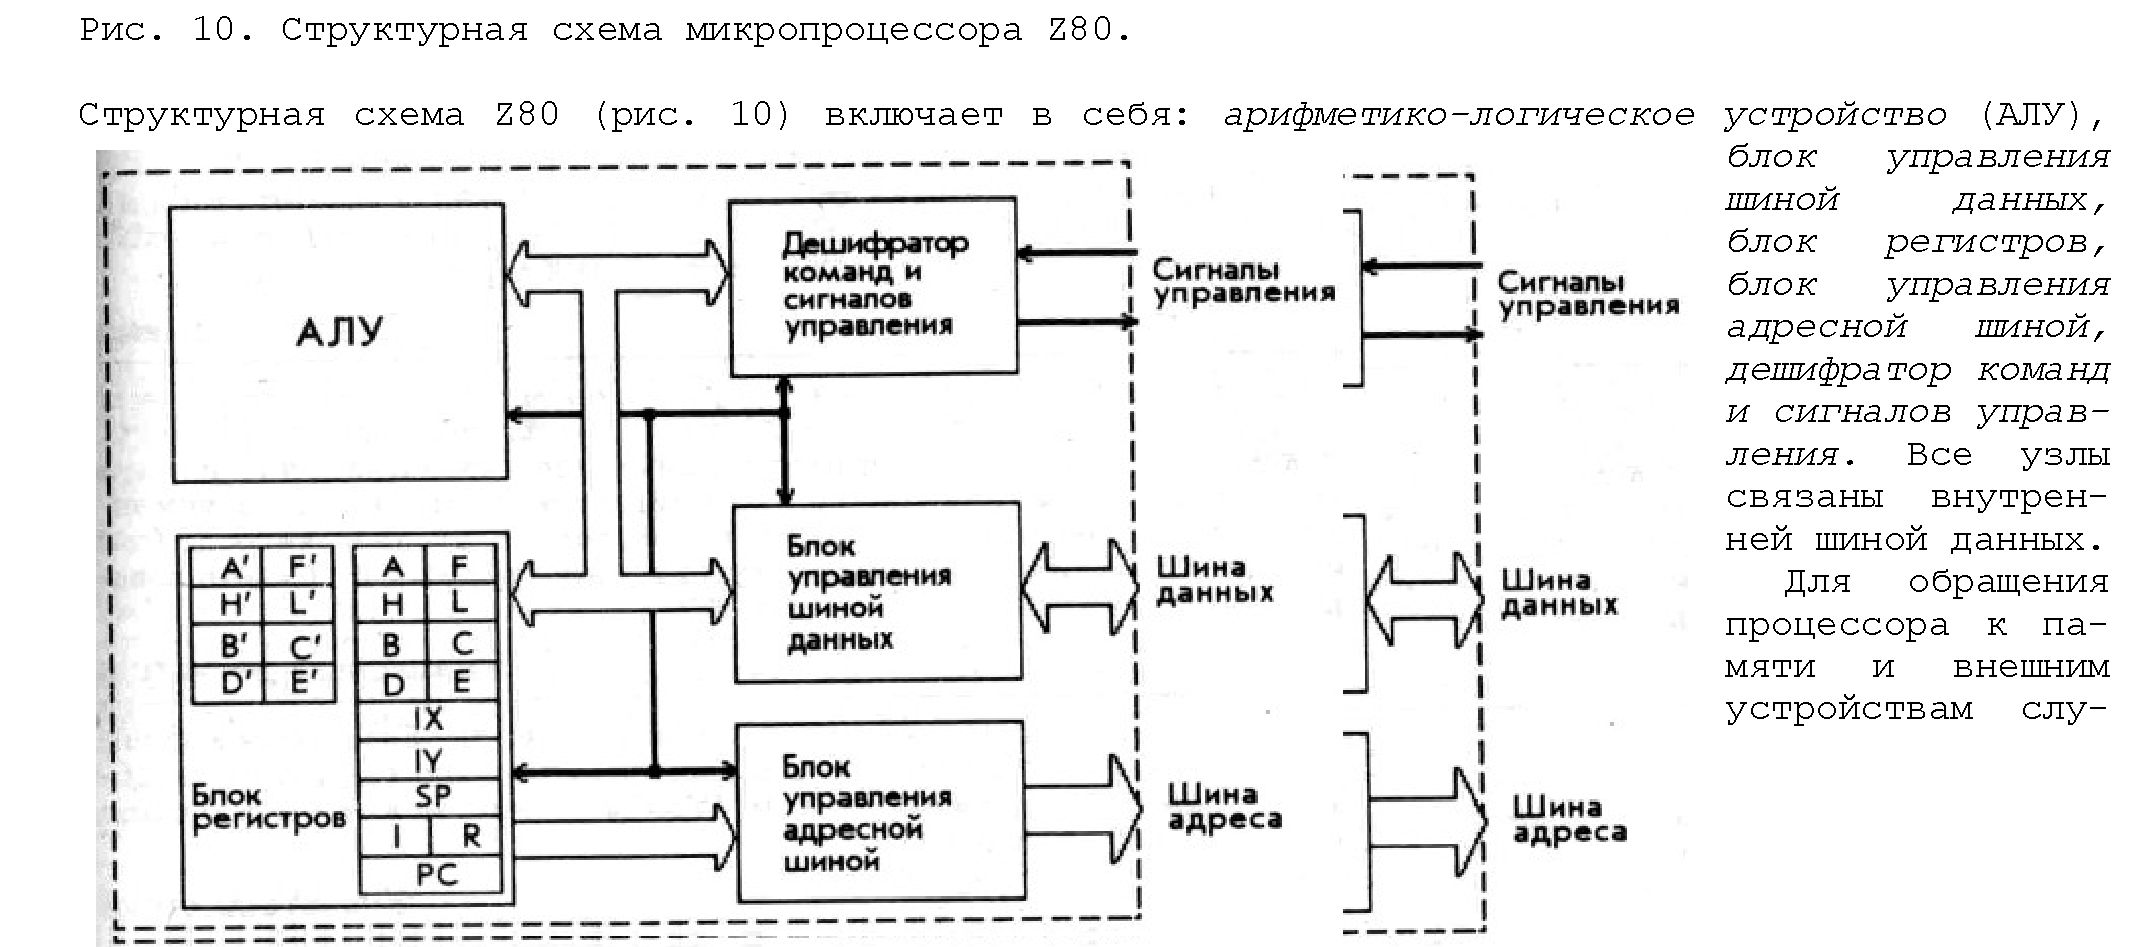 Ала пк. Микропроцессор z80 архитектура. Схема процессора z80. Структурная схема микропроцессорного устройства. Принципиальная схема процессора z80.